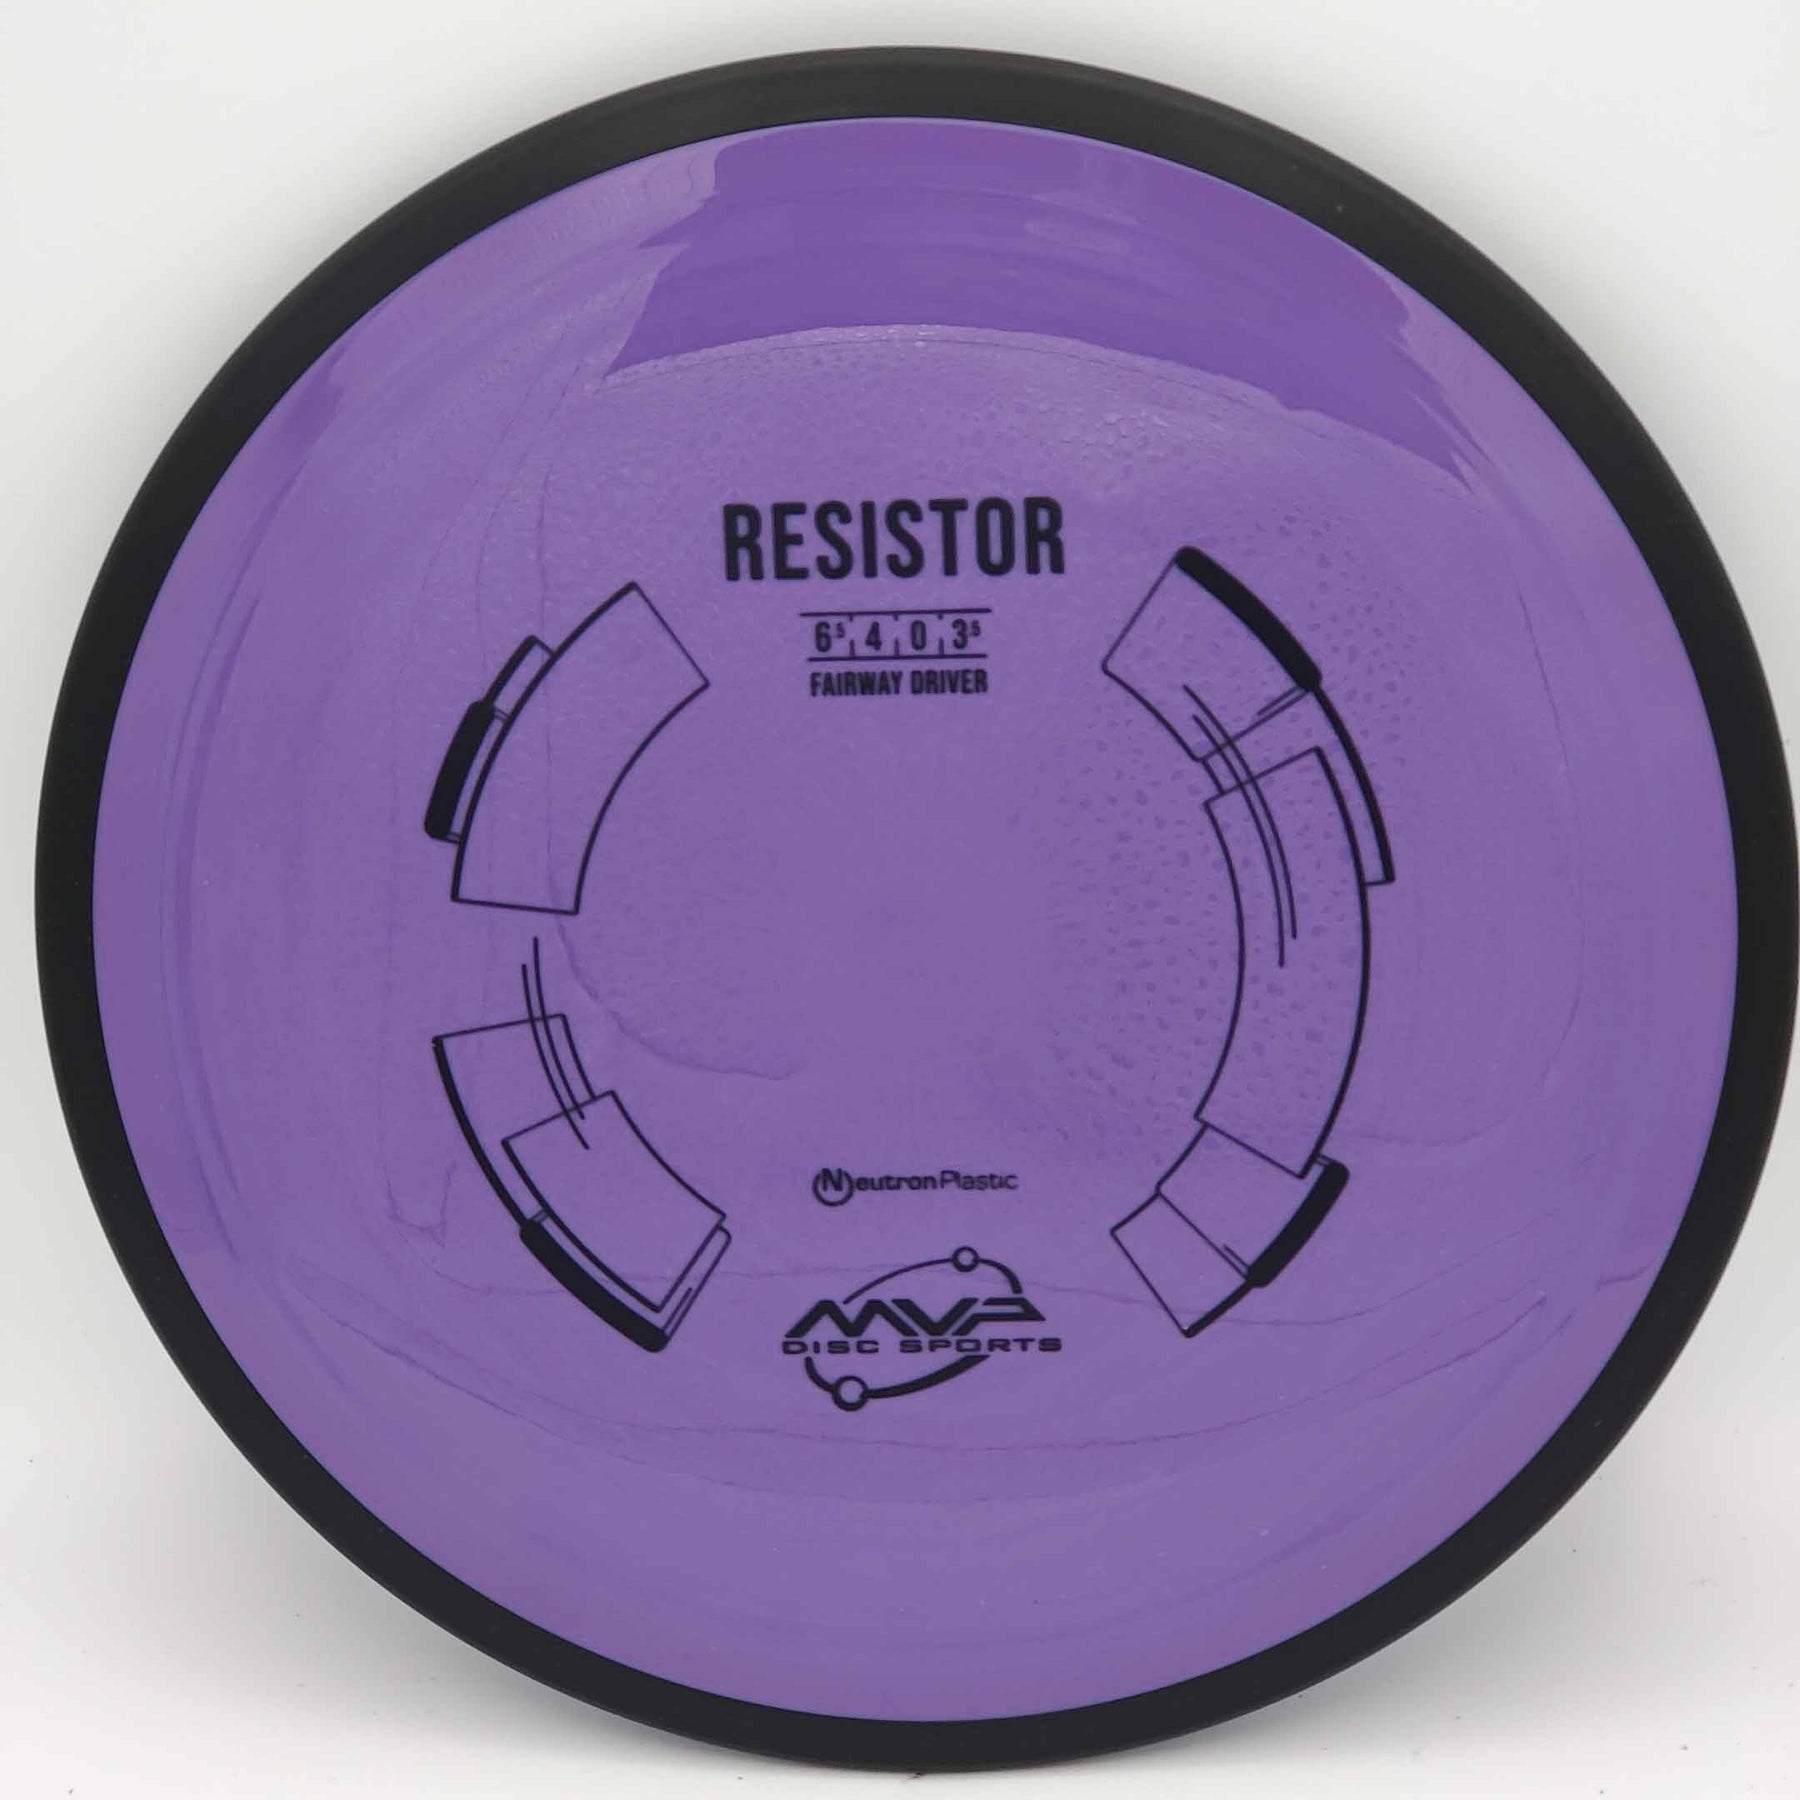 MVP Resistor - Neutron